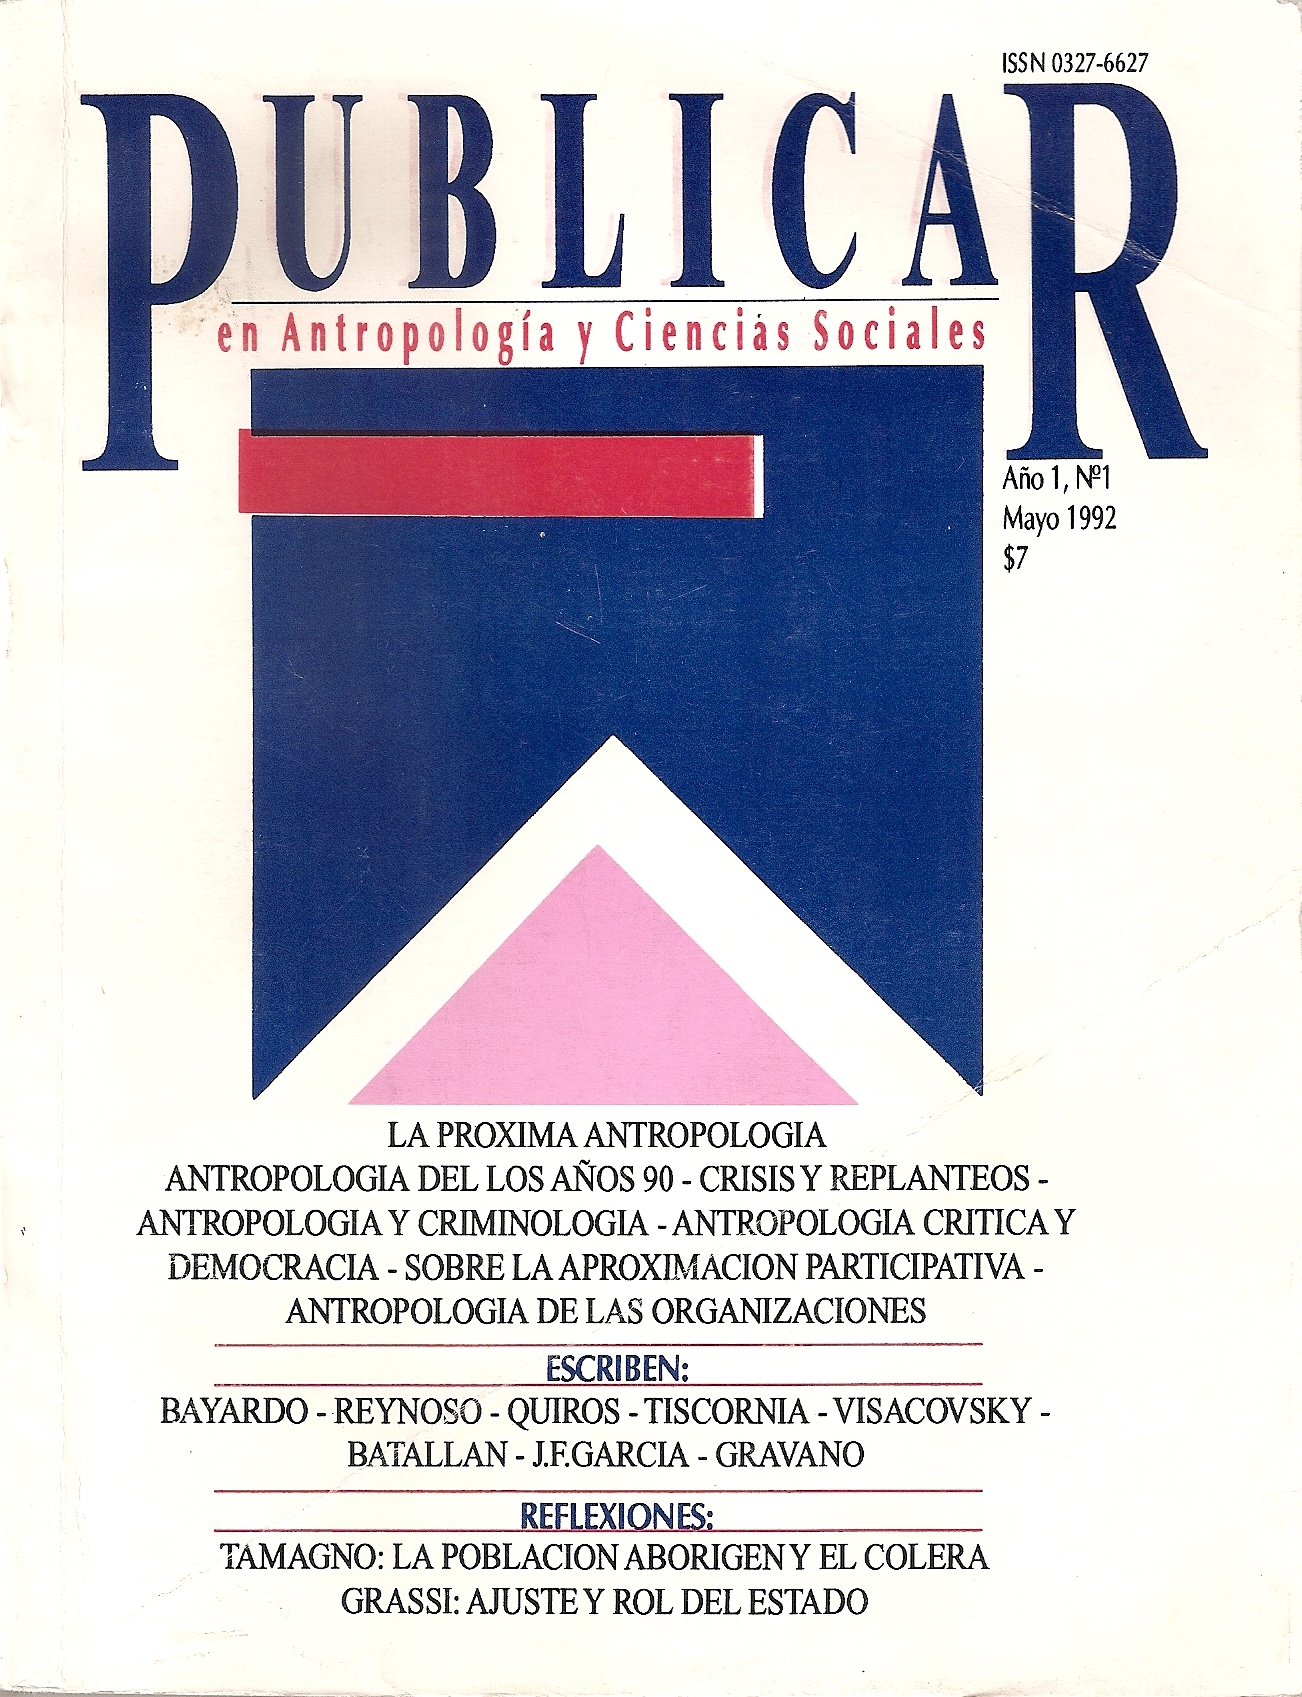 					Ver Núm. 1 (1992): PUBLICAR, año I, n° I, mayo 1992
				